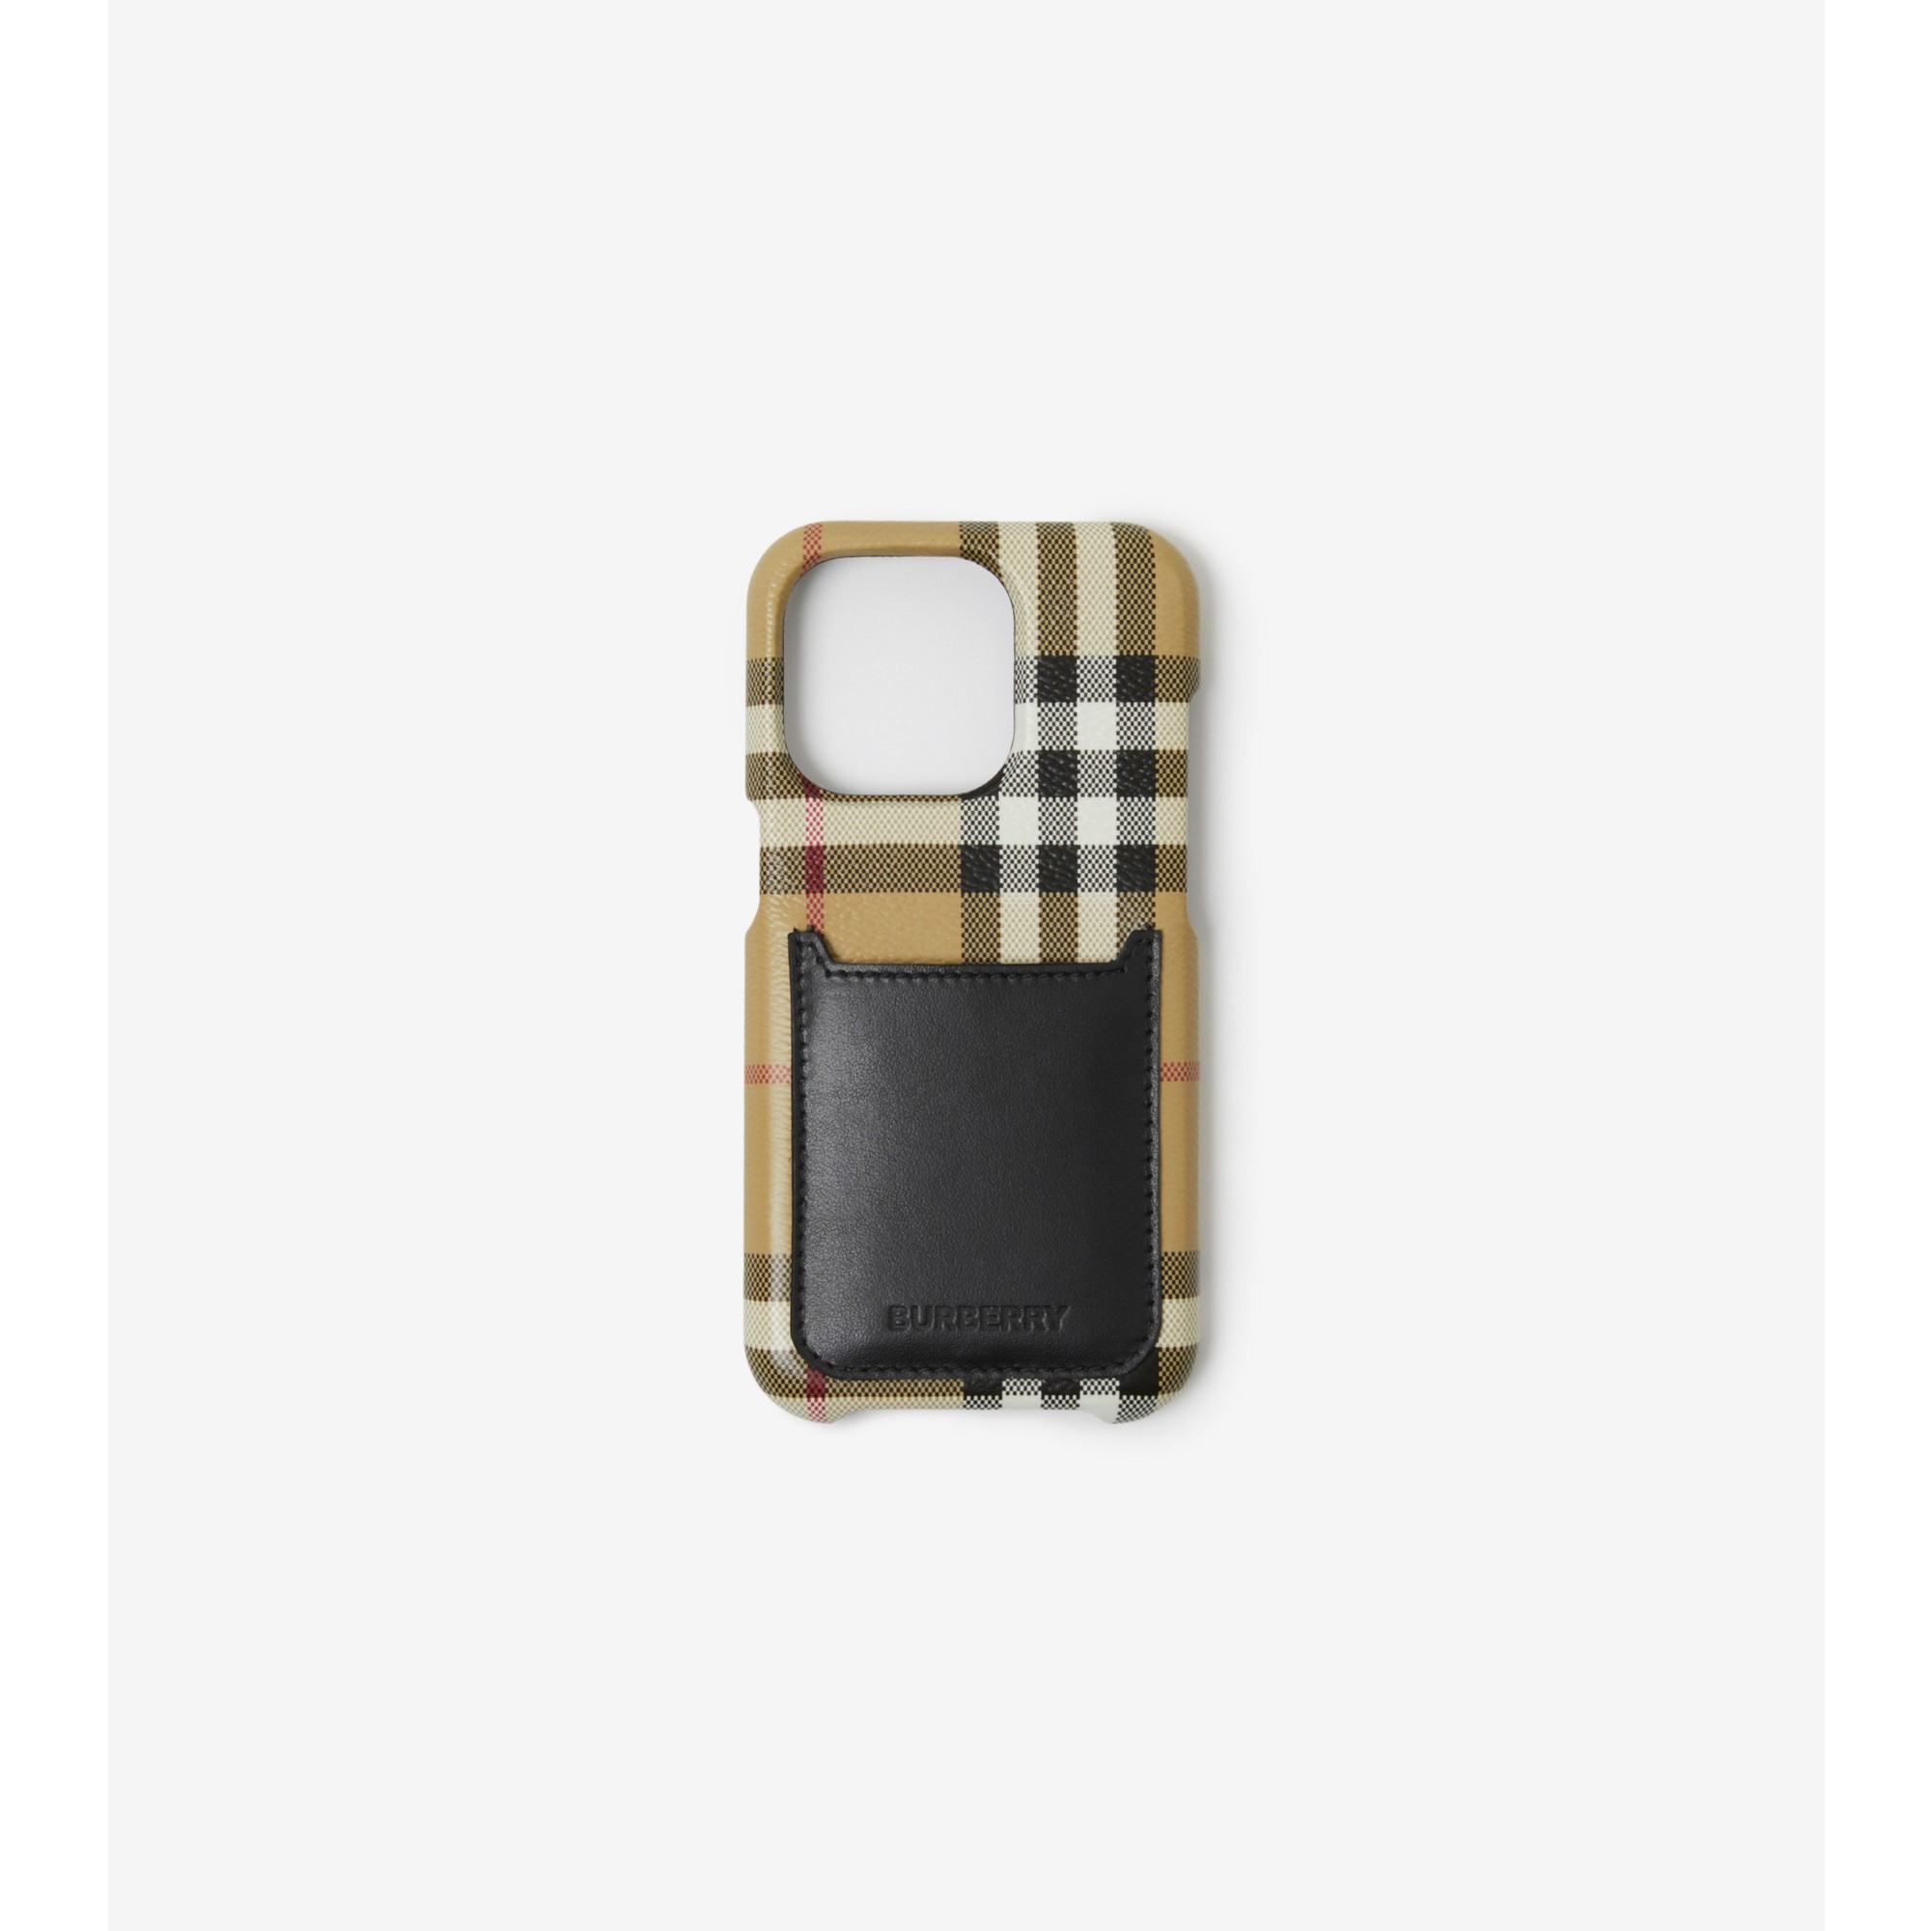 burberry iphone 4s case